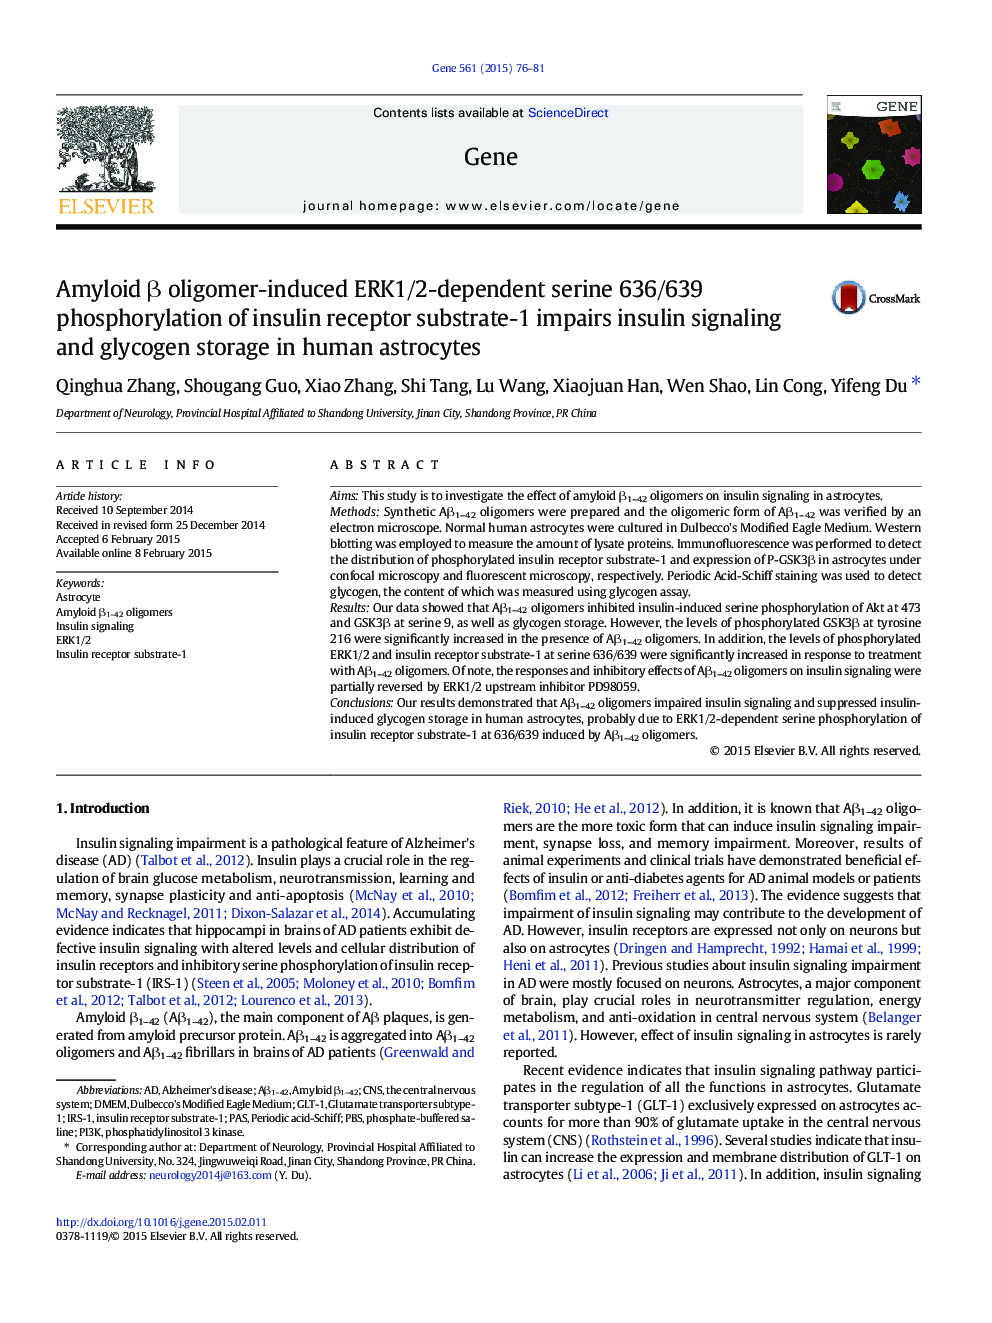 Amyloid β oligomer-induced ERK1/2-dependent serine 636/639 phosphorylation of insulin receptor substrate-1 impairs insulin signaling and glycogen storage in human astrocytes